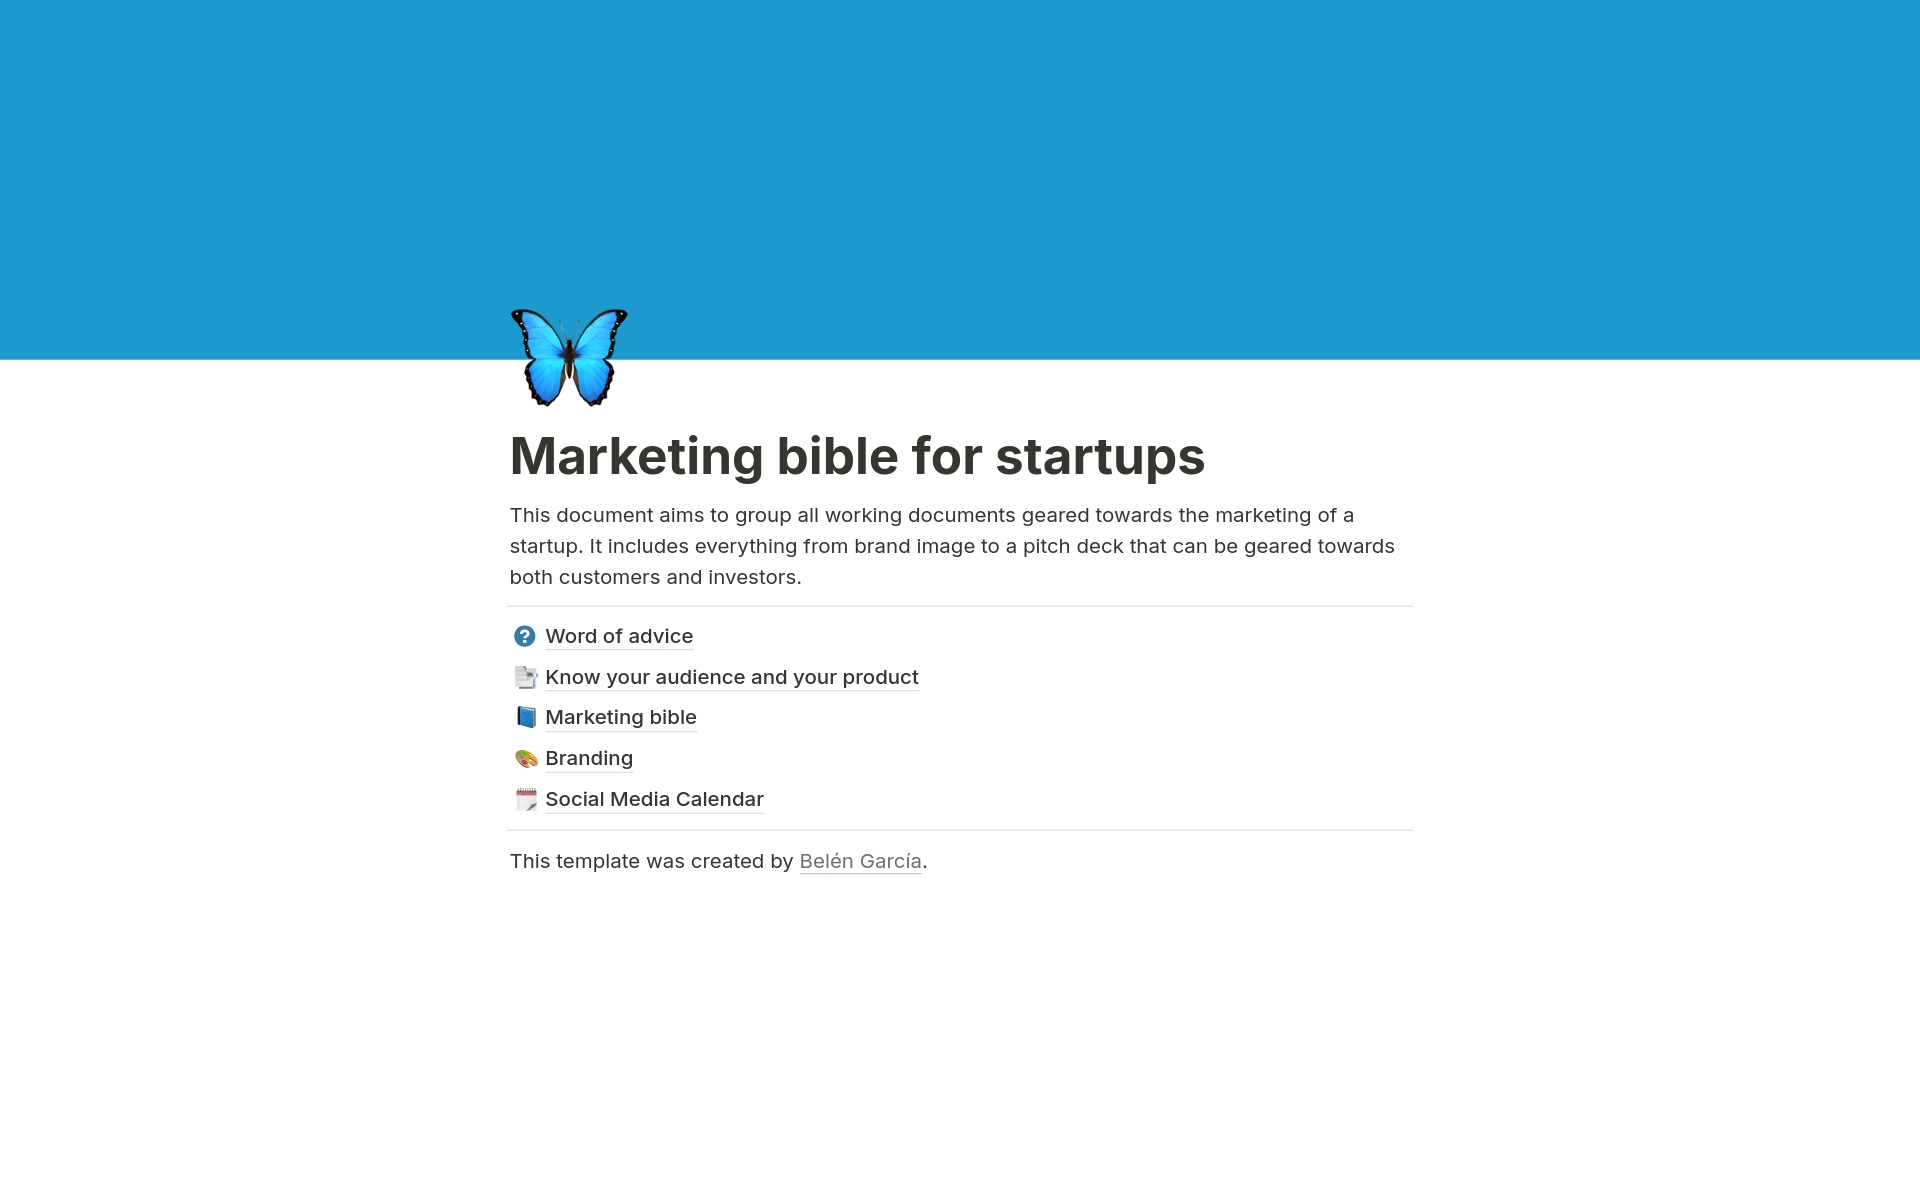 Vista previa de una plantilla para Marketing bible for startups